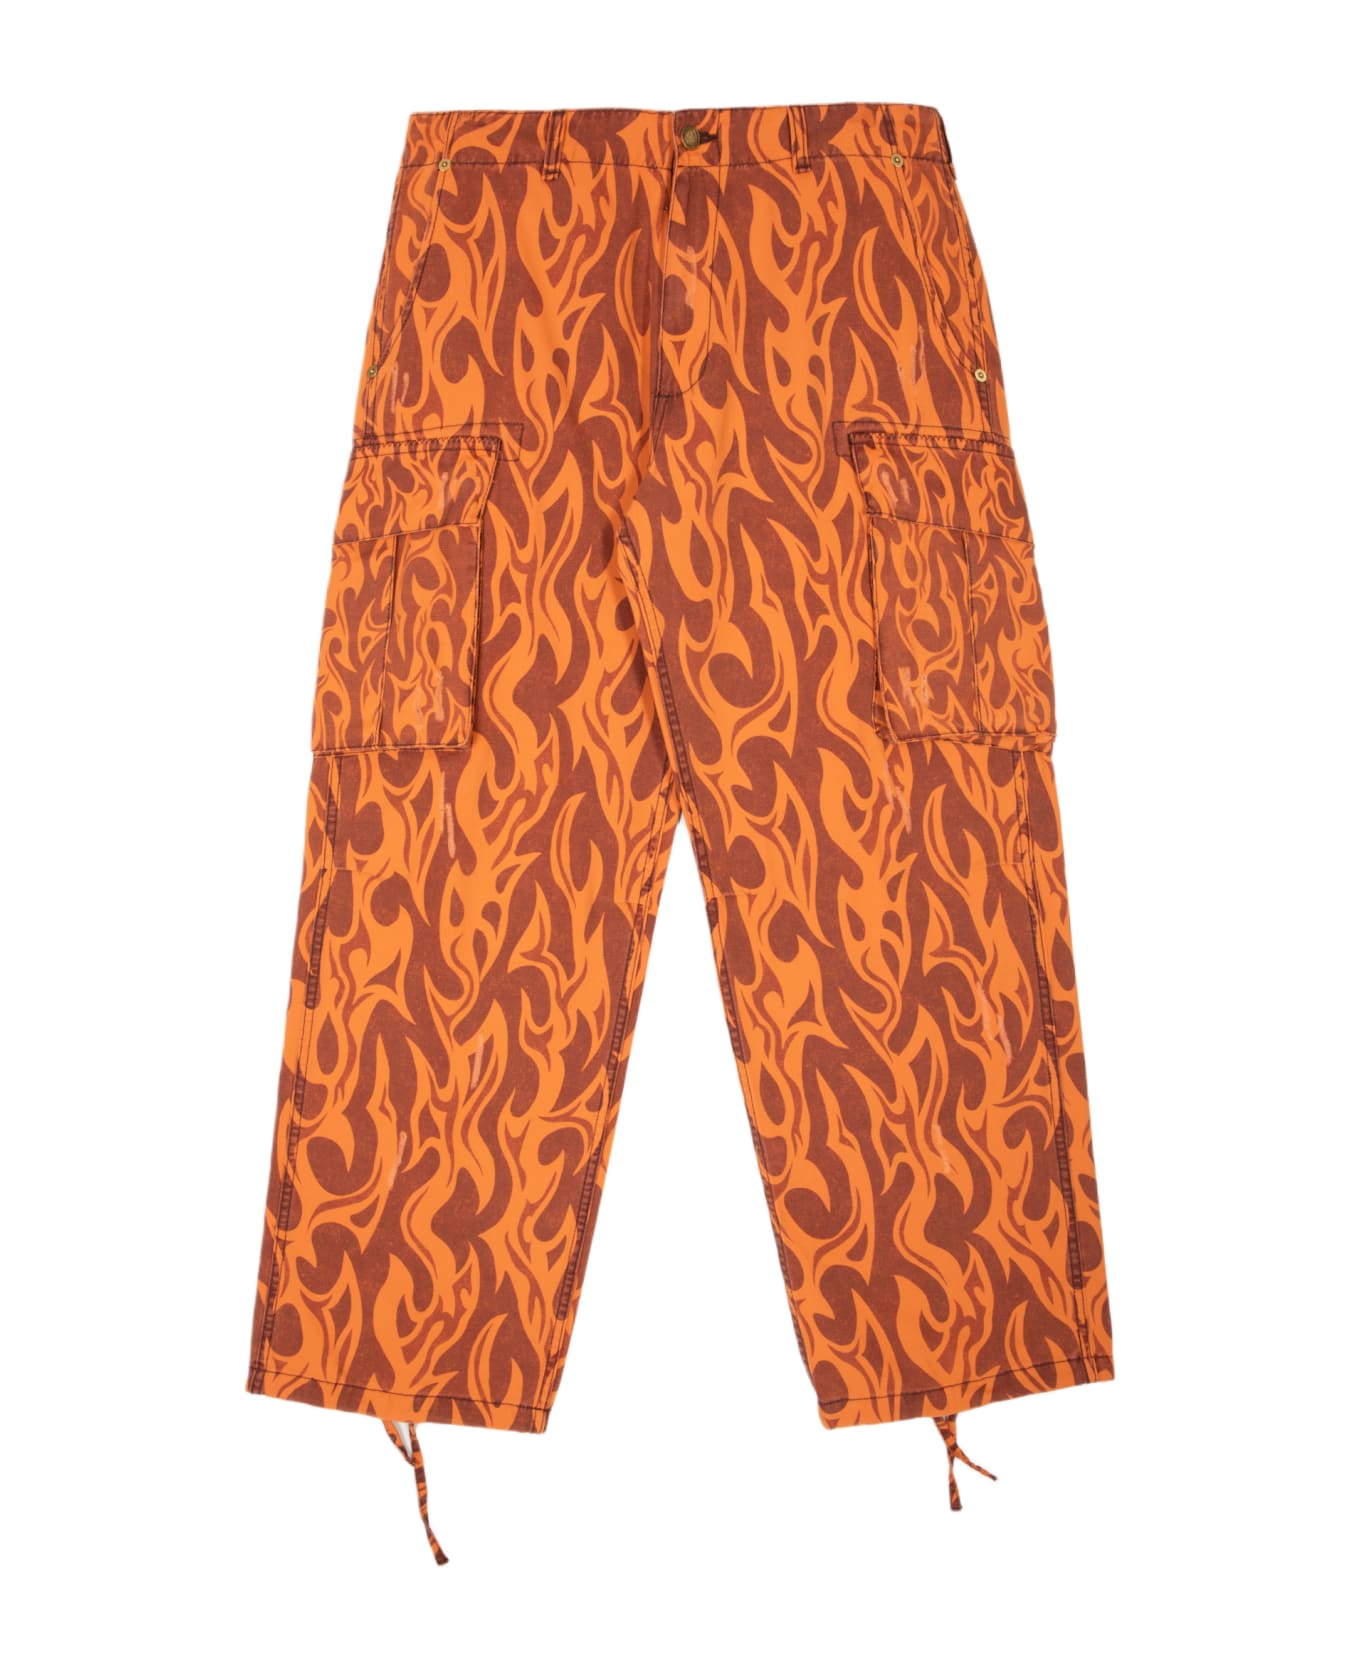 ERL Unisex Printed Cargo Pants Woven Orange canvas printed cargo pant - Unisex Printed Cargo Pants Woven - Arancio